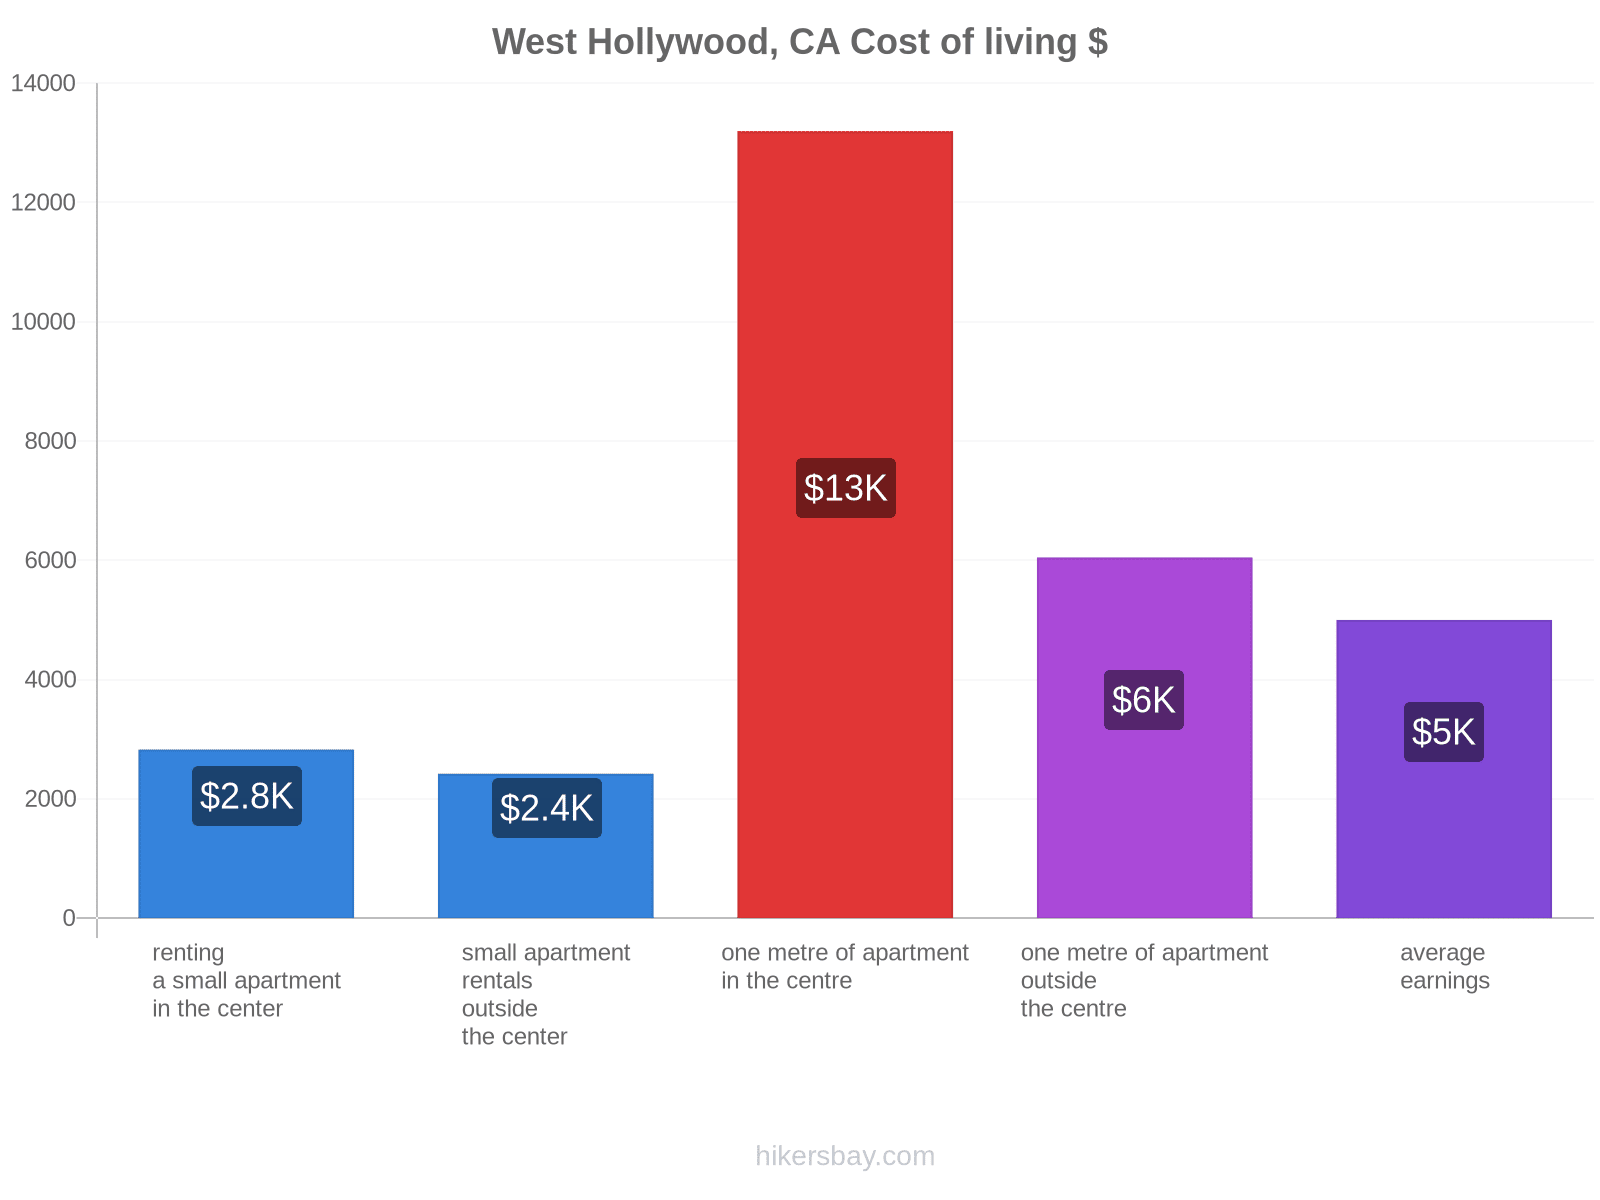 West Hollywood, CA cost of living hikersbay.com